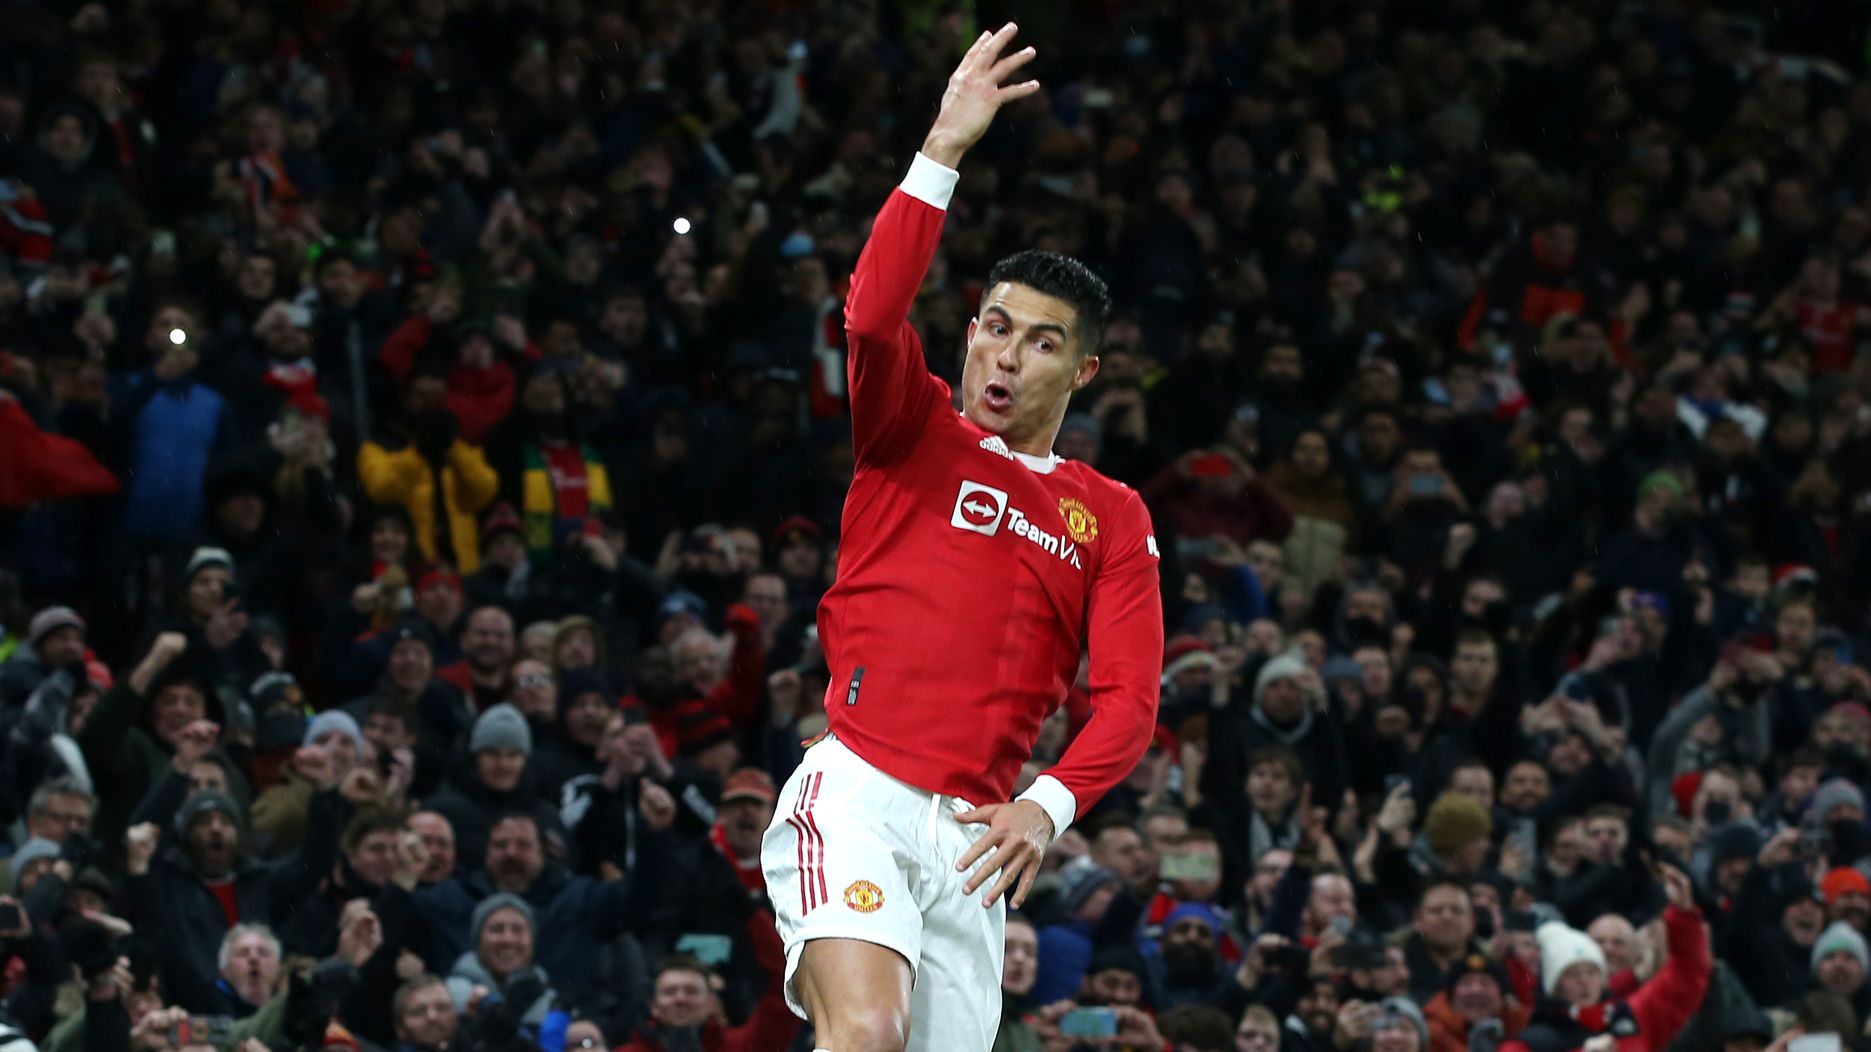 Ronaldo saves United's blushes after goalie gaffe